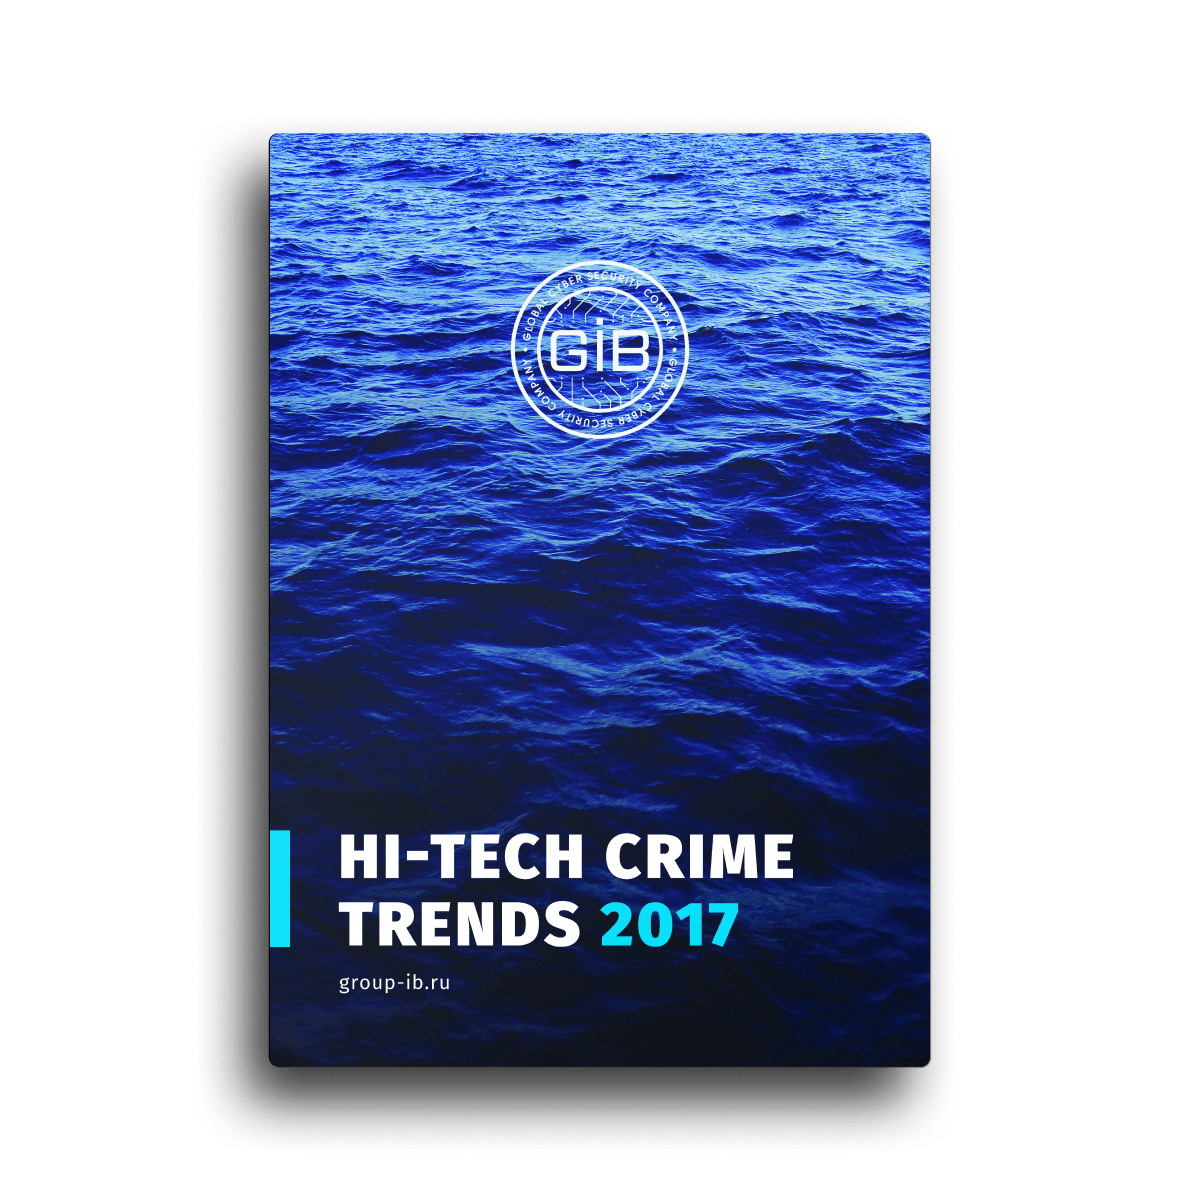 Hi-Tech Crime Trends 2017